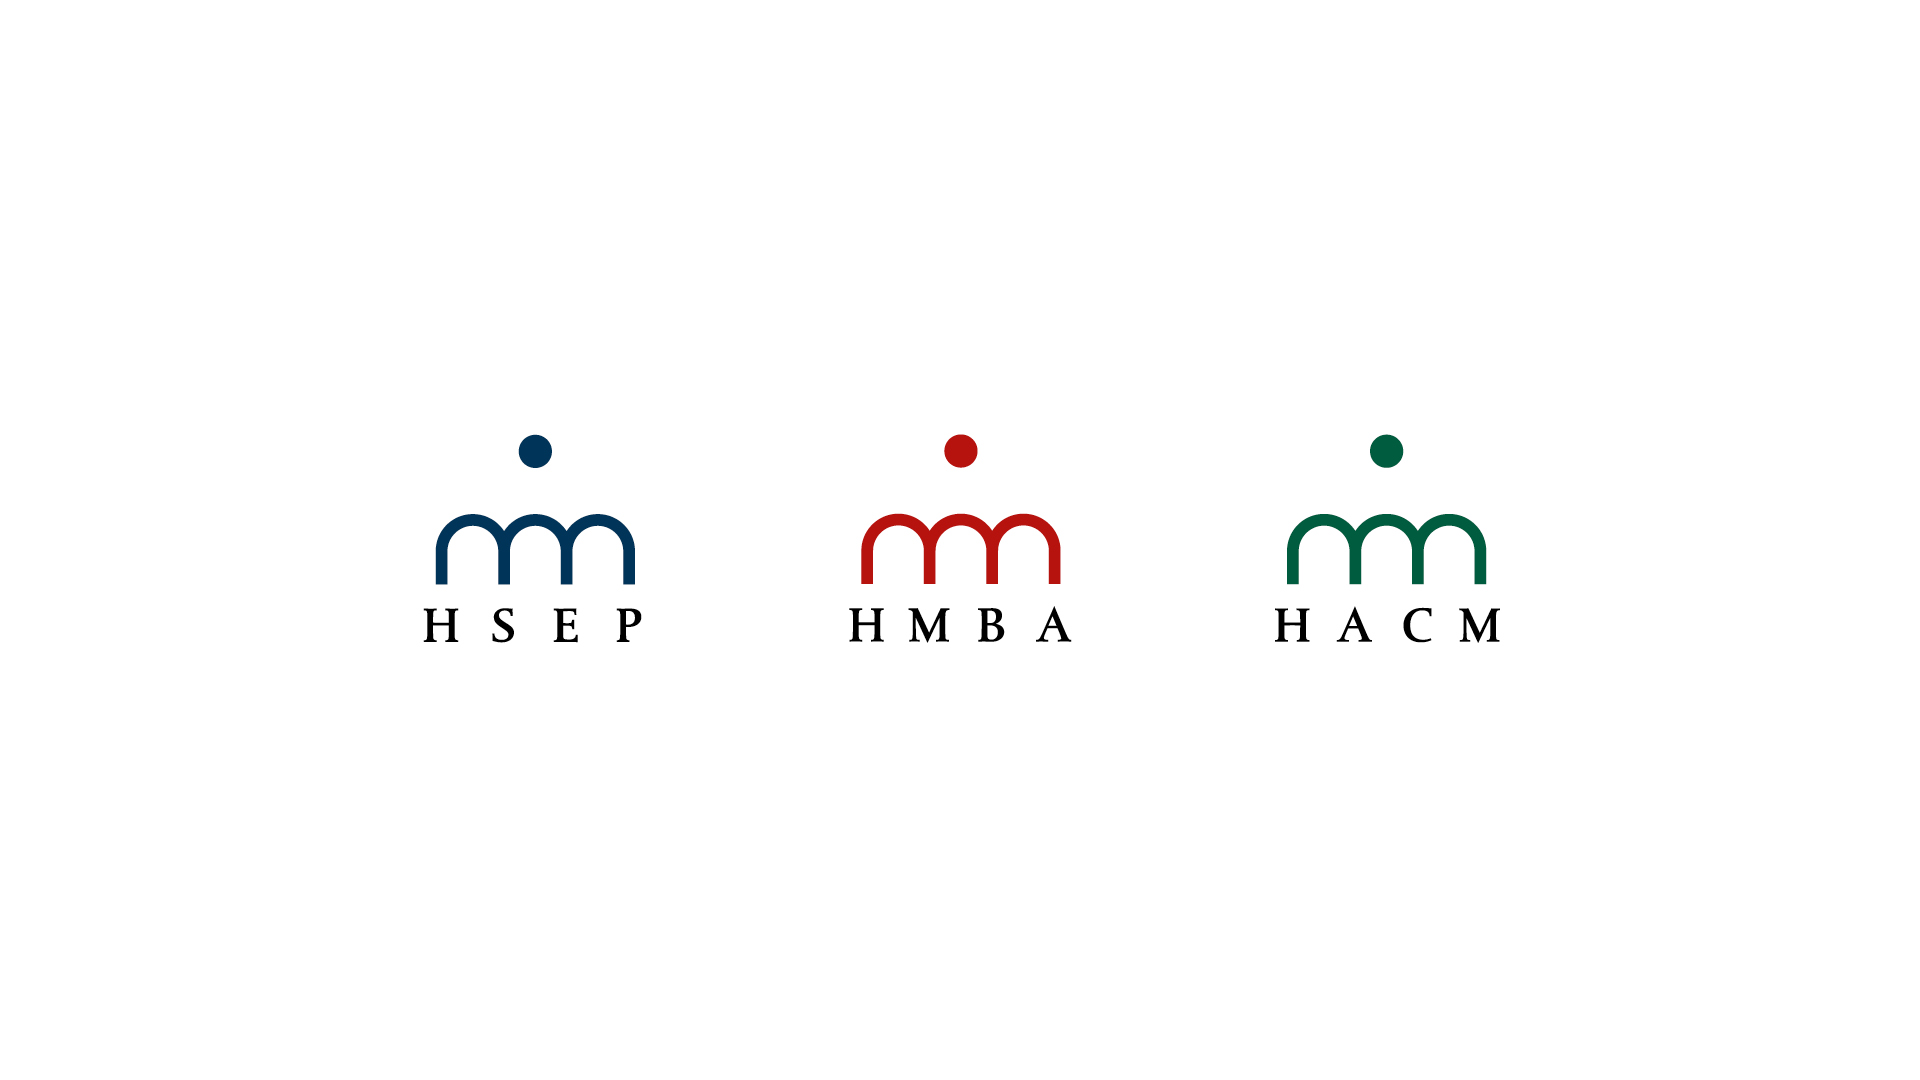 HSEP/HMBA/HACMのブランドシンボルロゴ